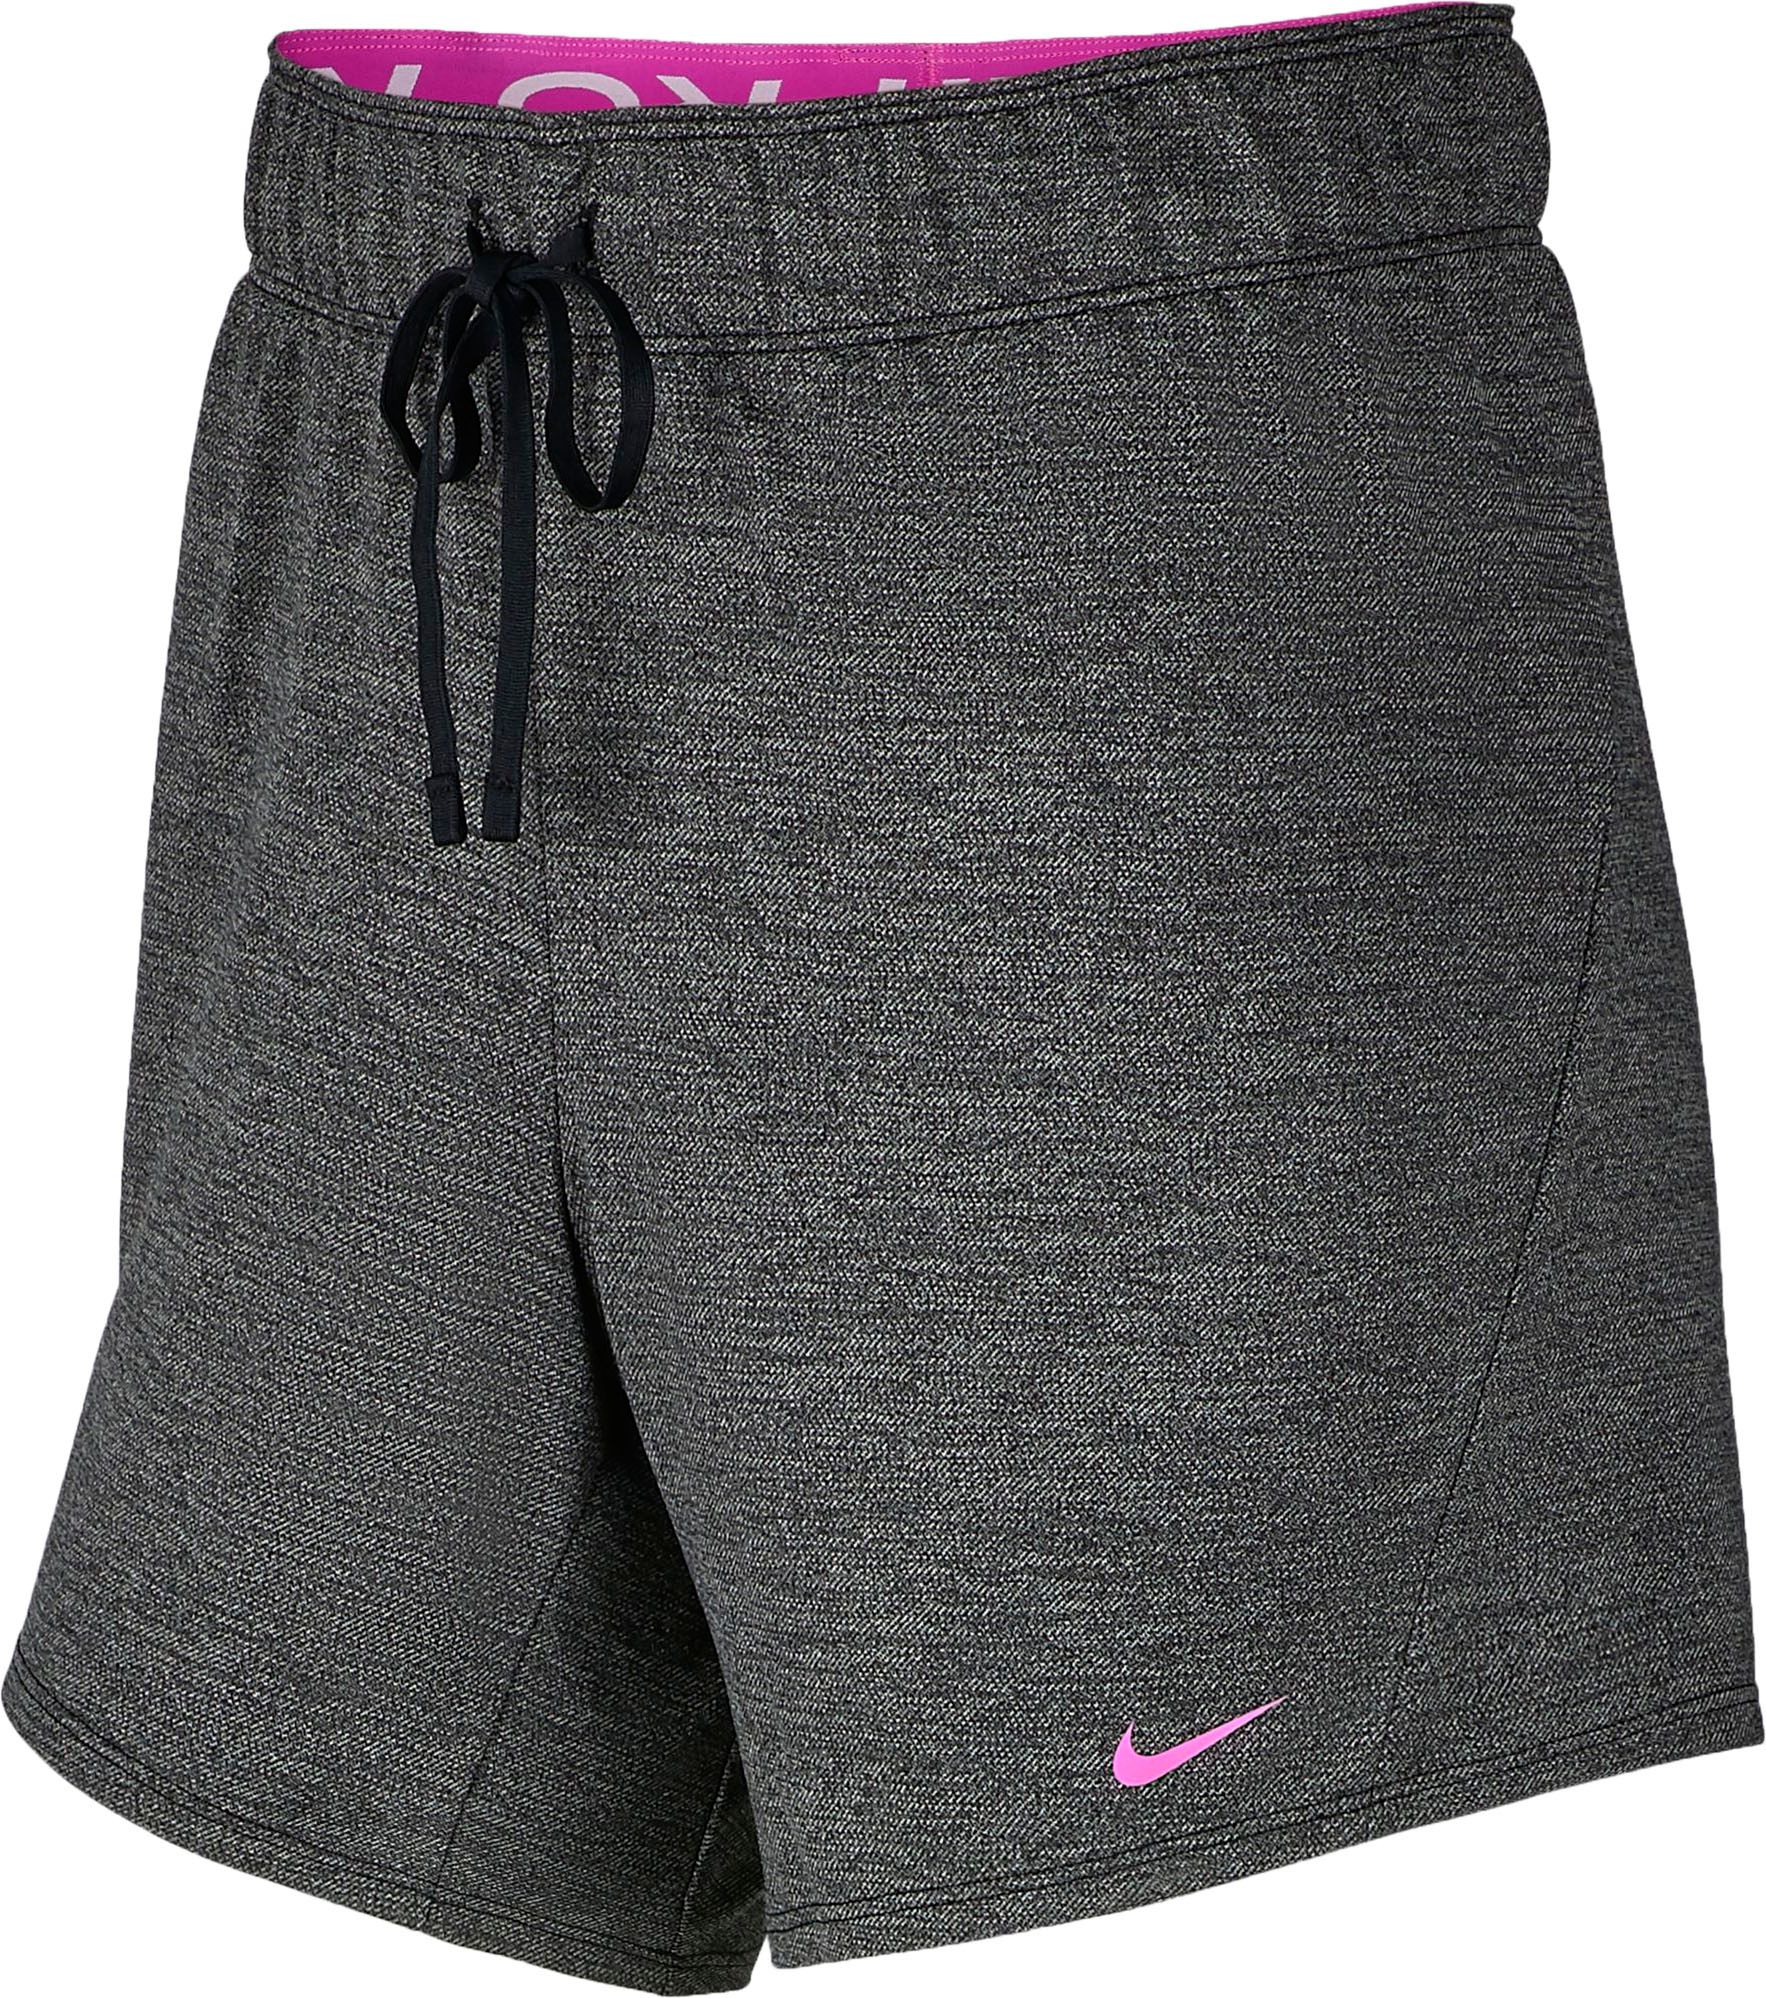 Nike Women's Dri-FIT Training Shorts 